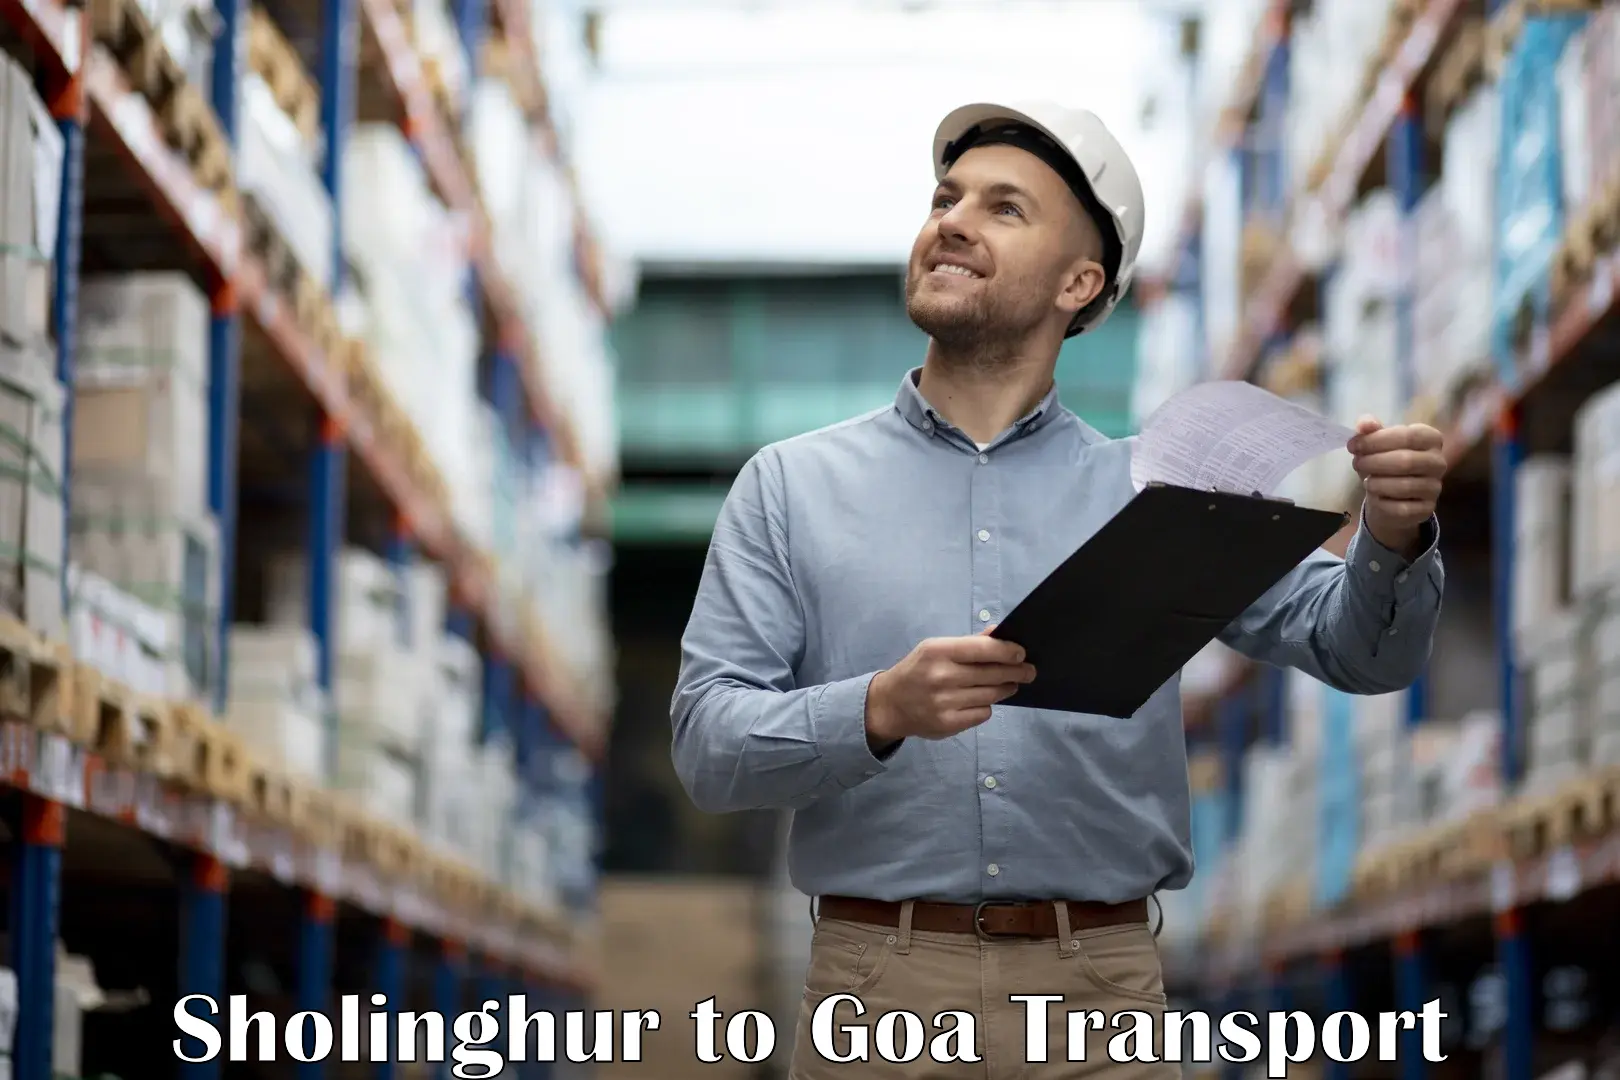 Transport in sharing in Sholinghur to Ponda